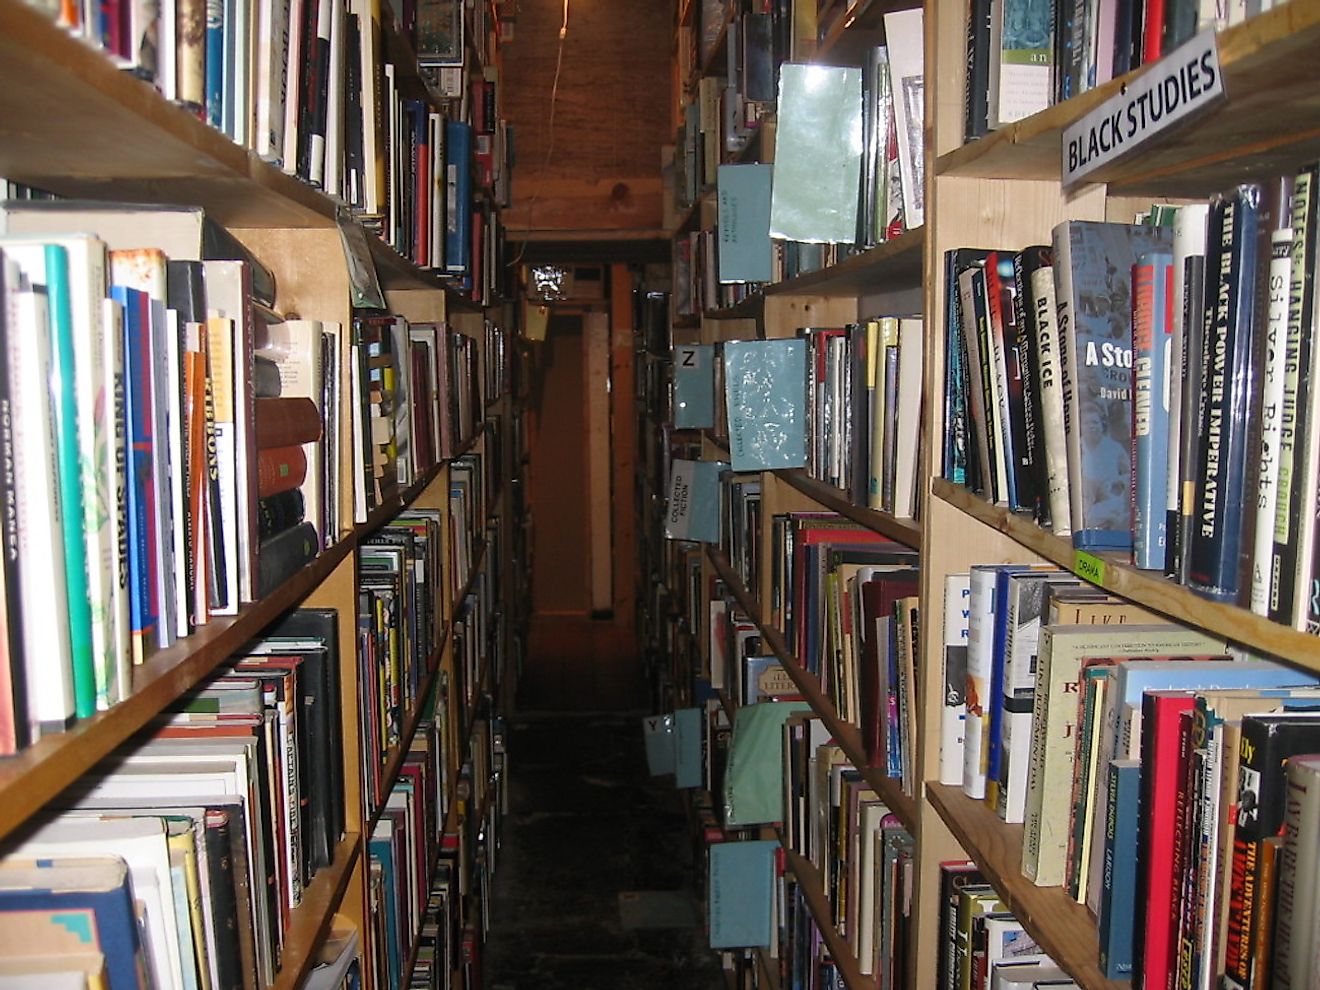 Myopic Books. Image credit: Scott Rettberg/Flickr.com